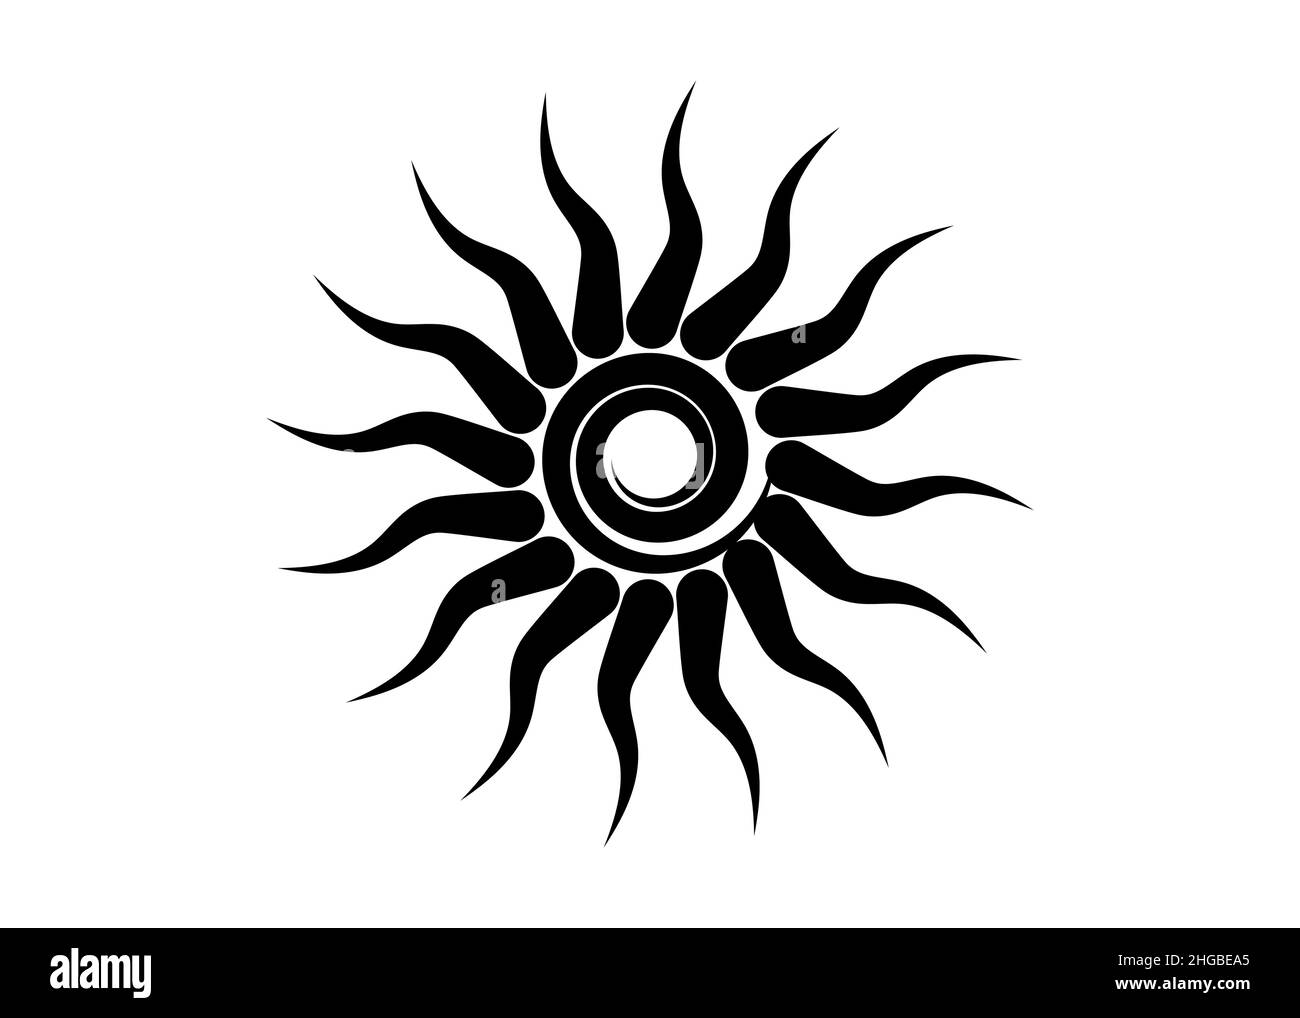 Black Tribal Sun Tattoo Sonnenrad Symbol, sun wheel sign. Summer icon. The ancient European esoteric element. Logo Graphic element spiral shape sign Stock Vector